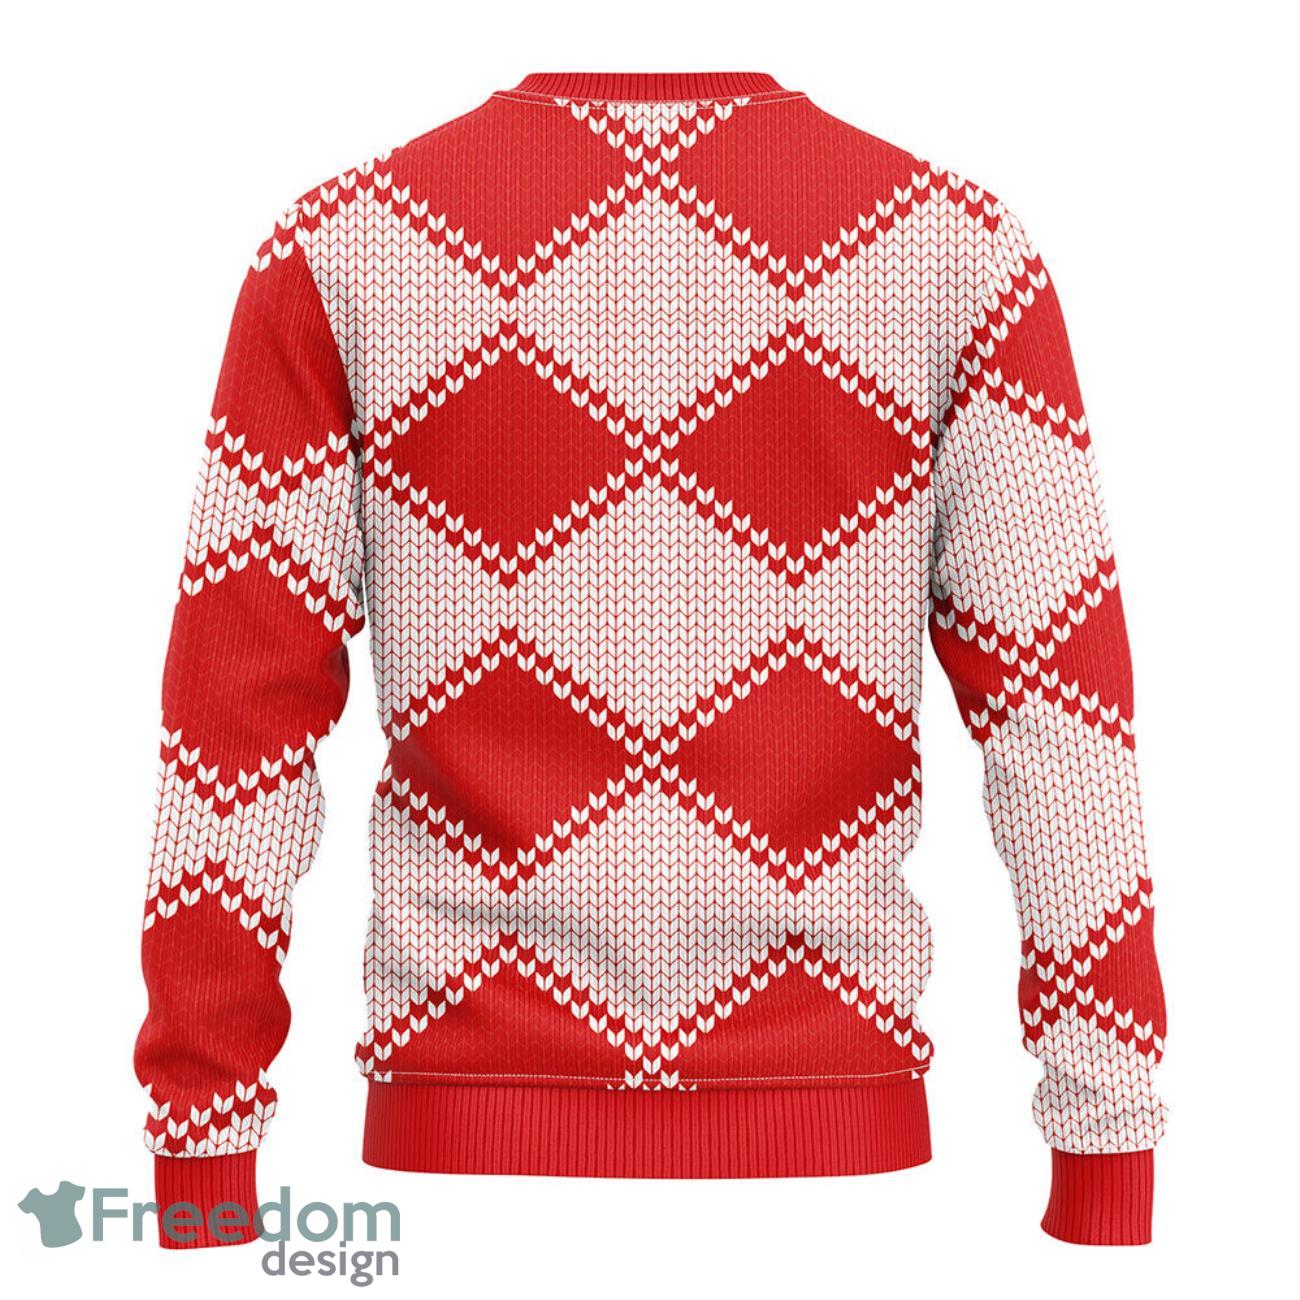 Detroit Red Wings Hockey Custom Ugly Christmas Sweater - EmonShop - Tagotee